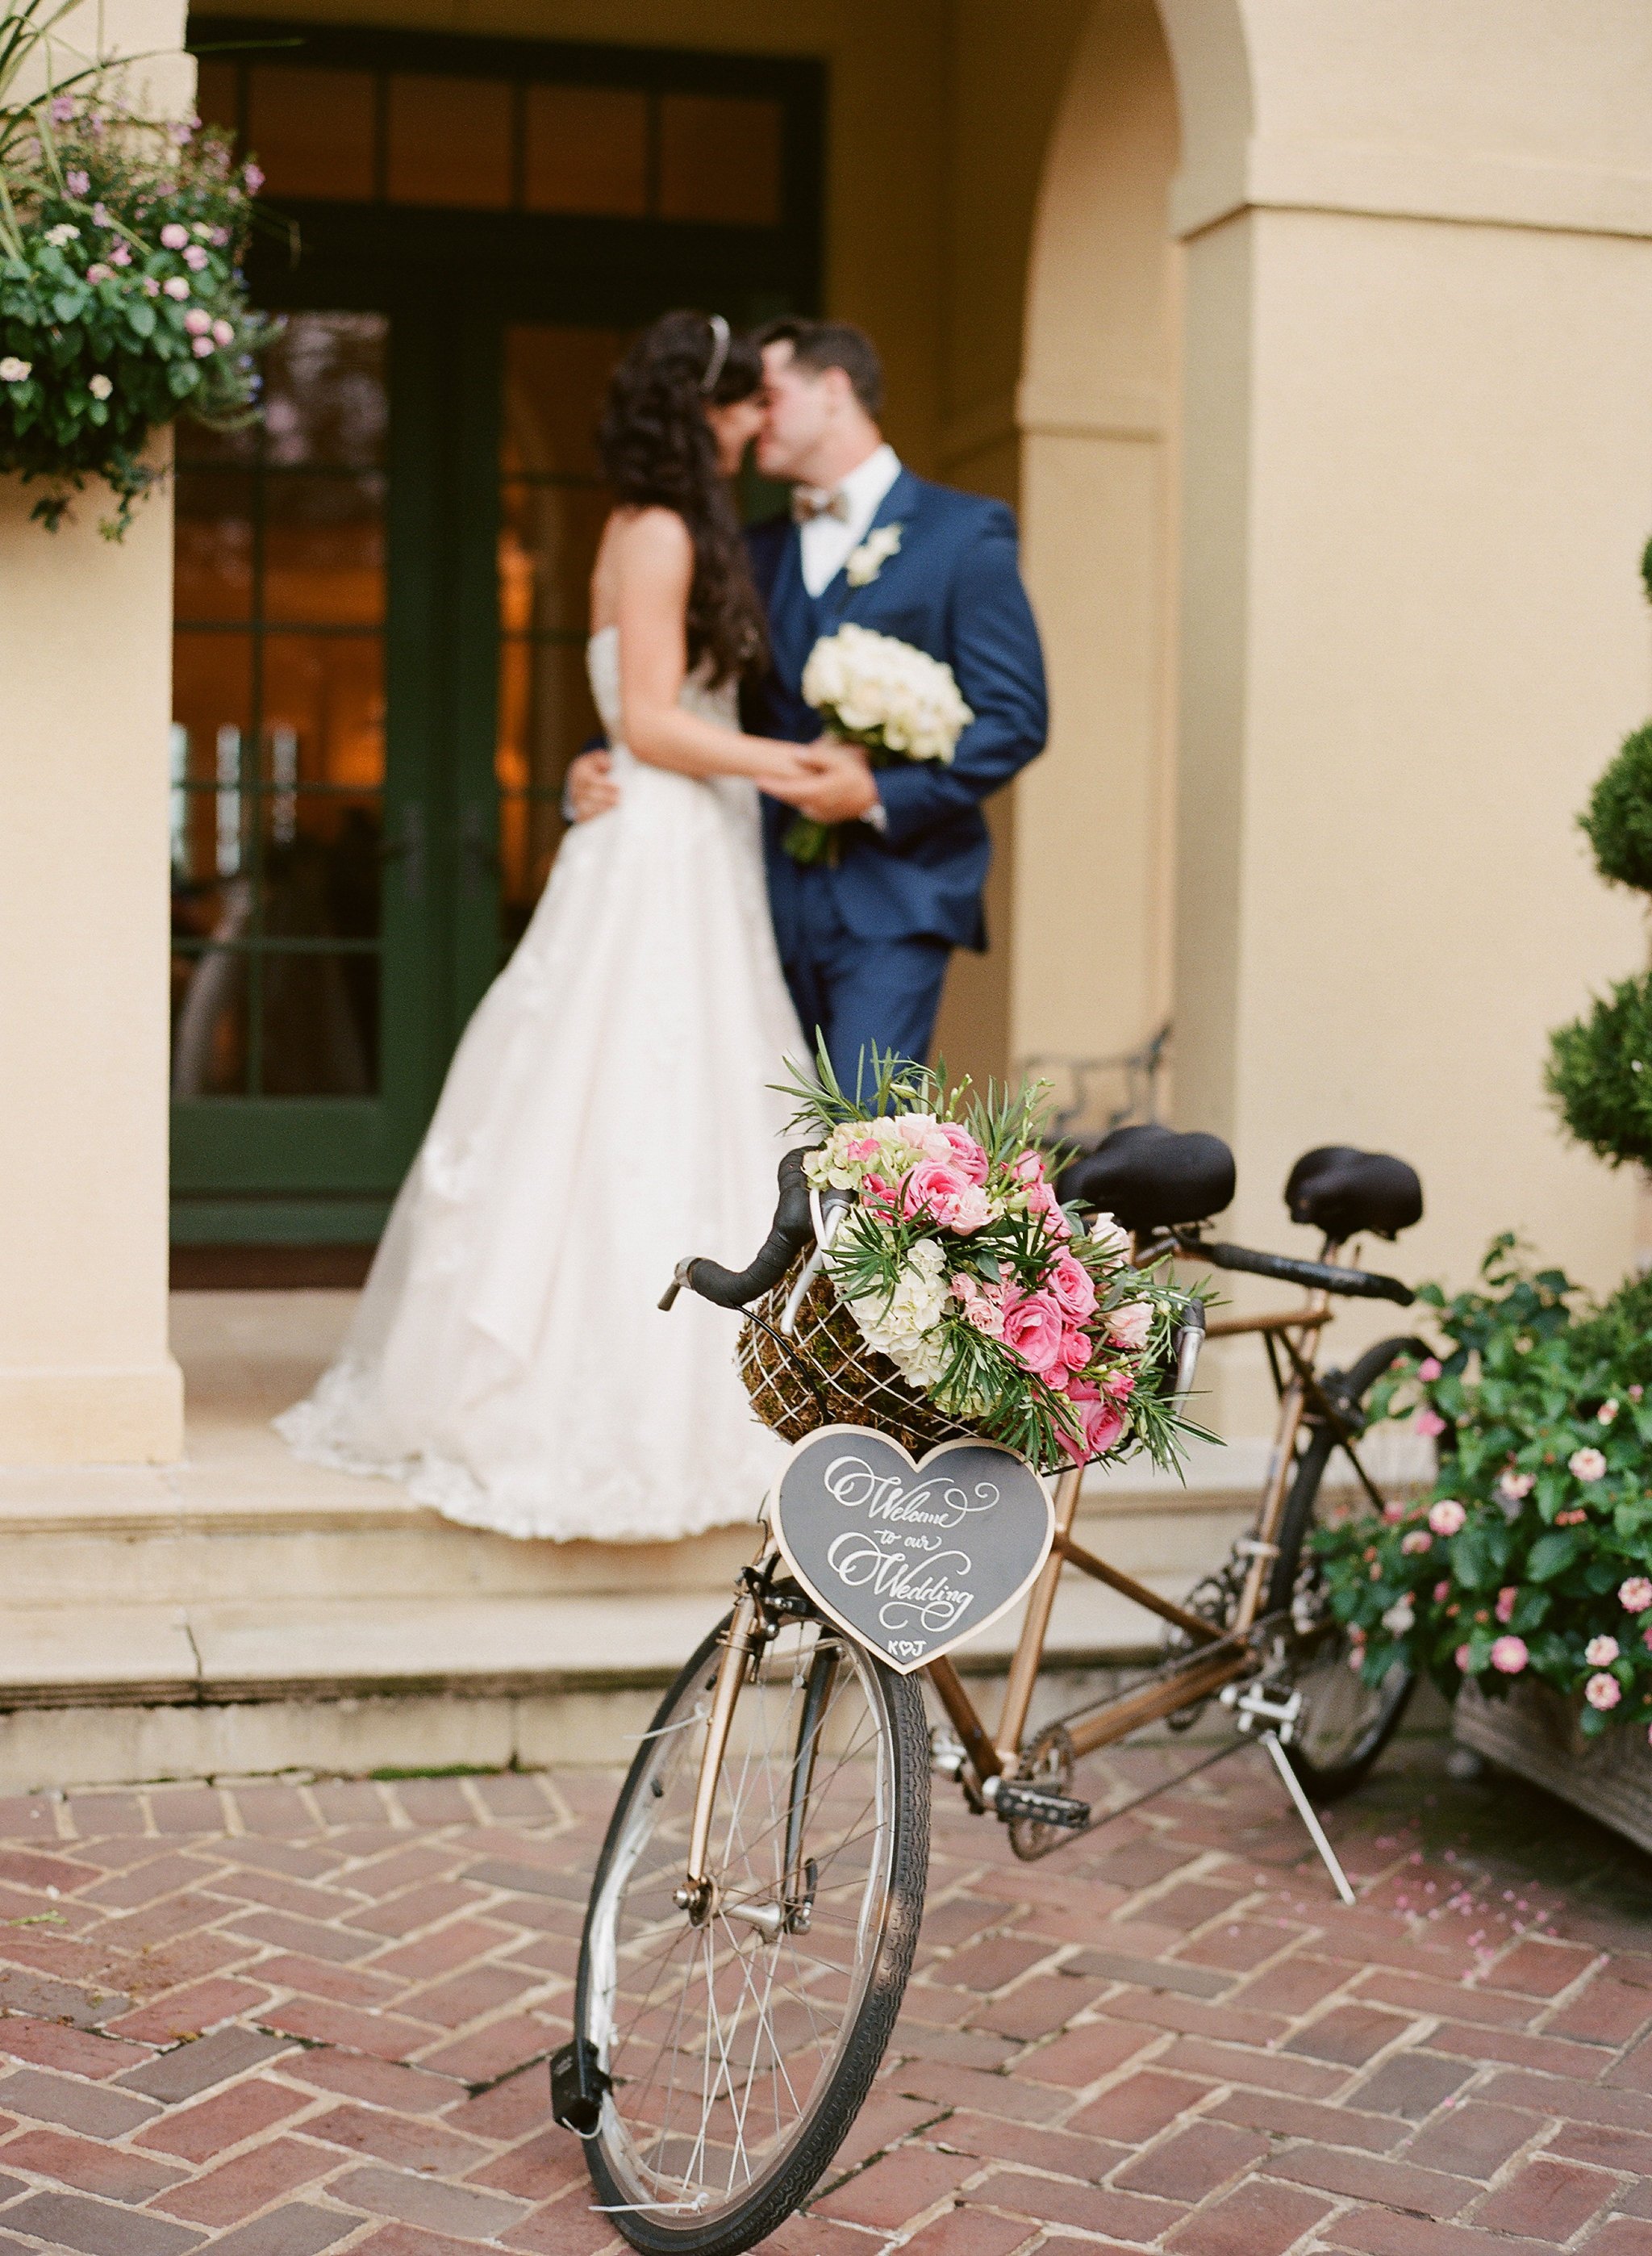 Katelyn Mancini and Jordan Coffman Deer Wedding With Silent Disco and Bicycle